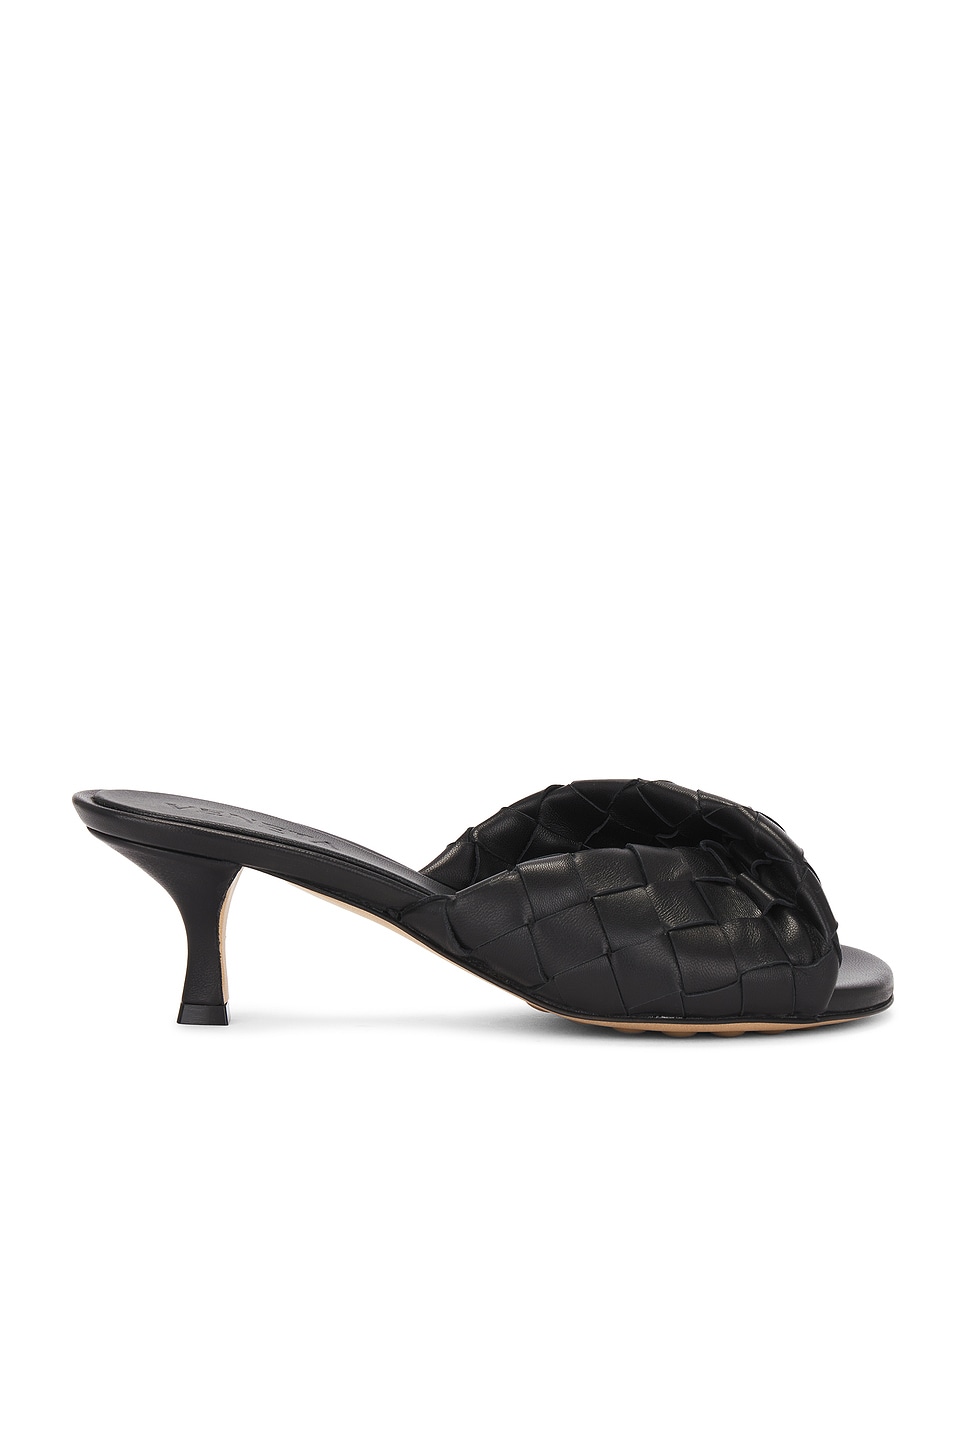 Image 1 of Bottega Veneta Blink Sandal in Black